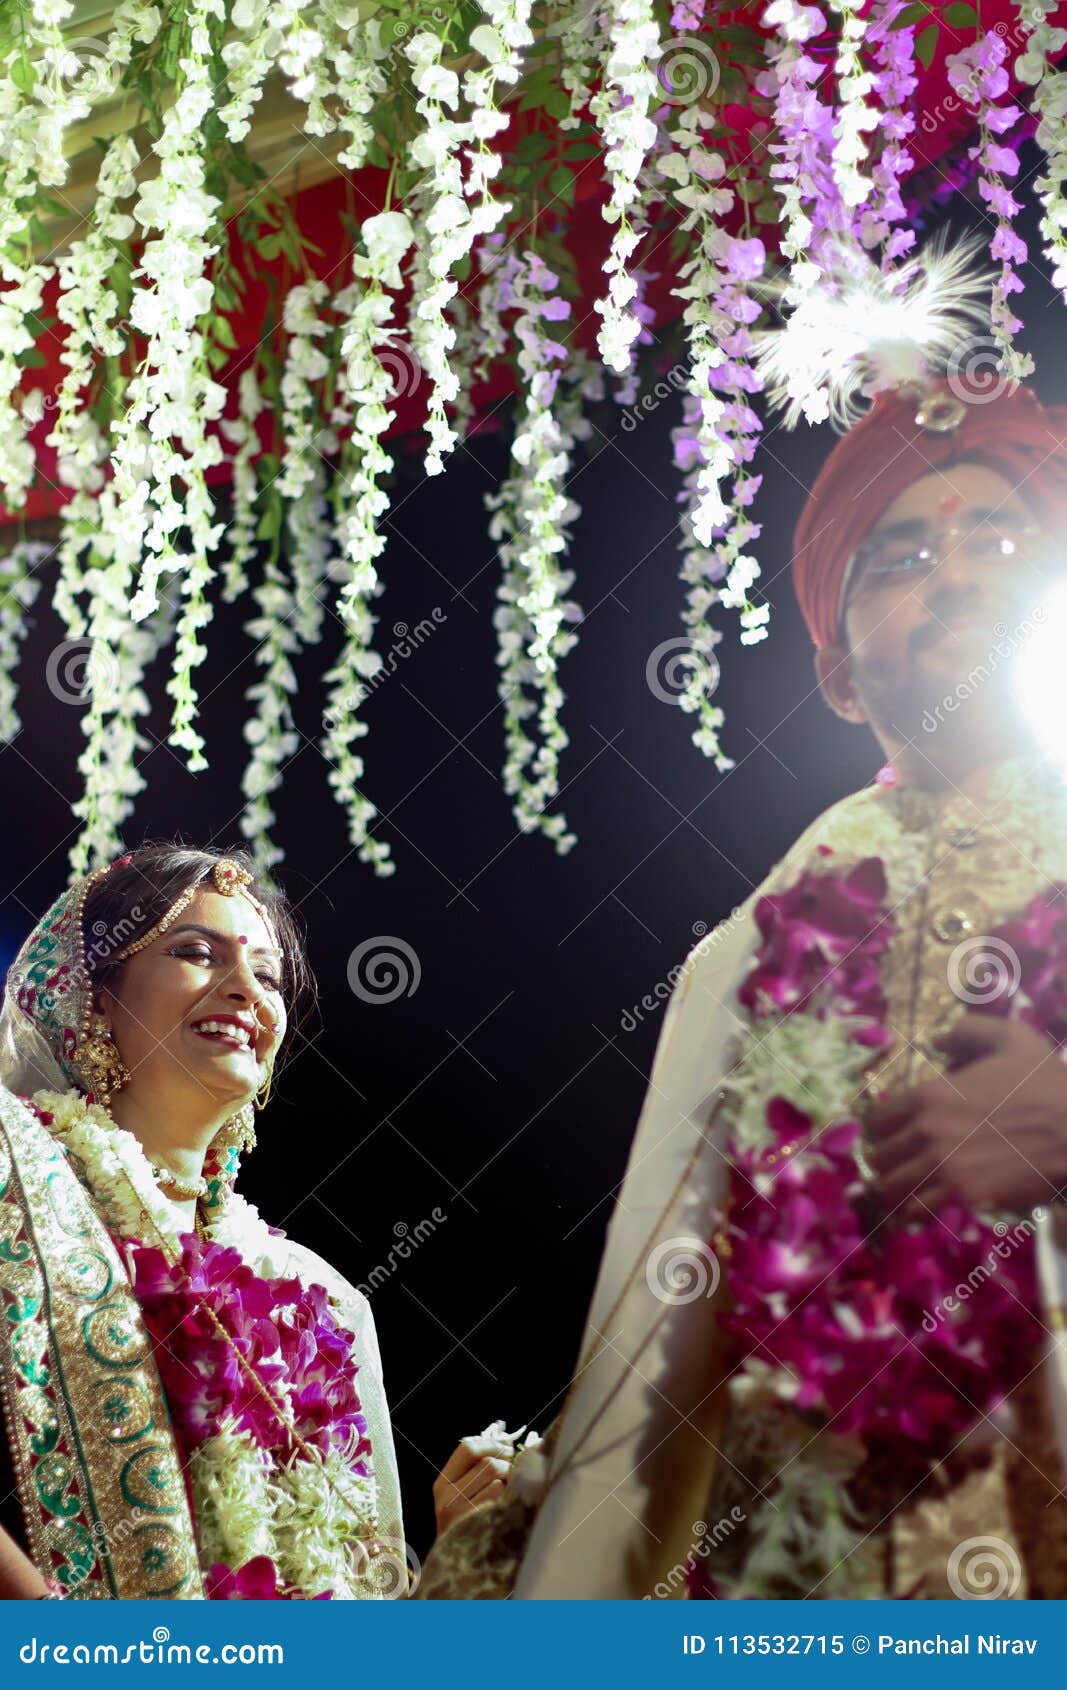 Pin by Kami on Serwany | Wedding couple poses, Indian bride photography  poses, Indian wedding poses